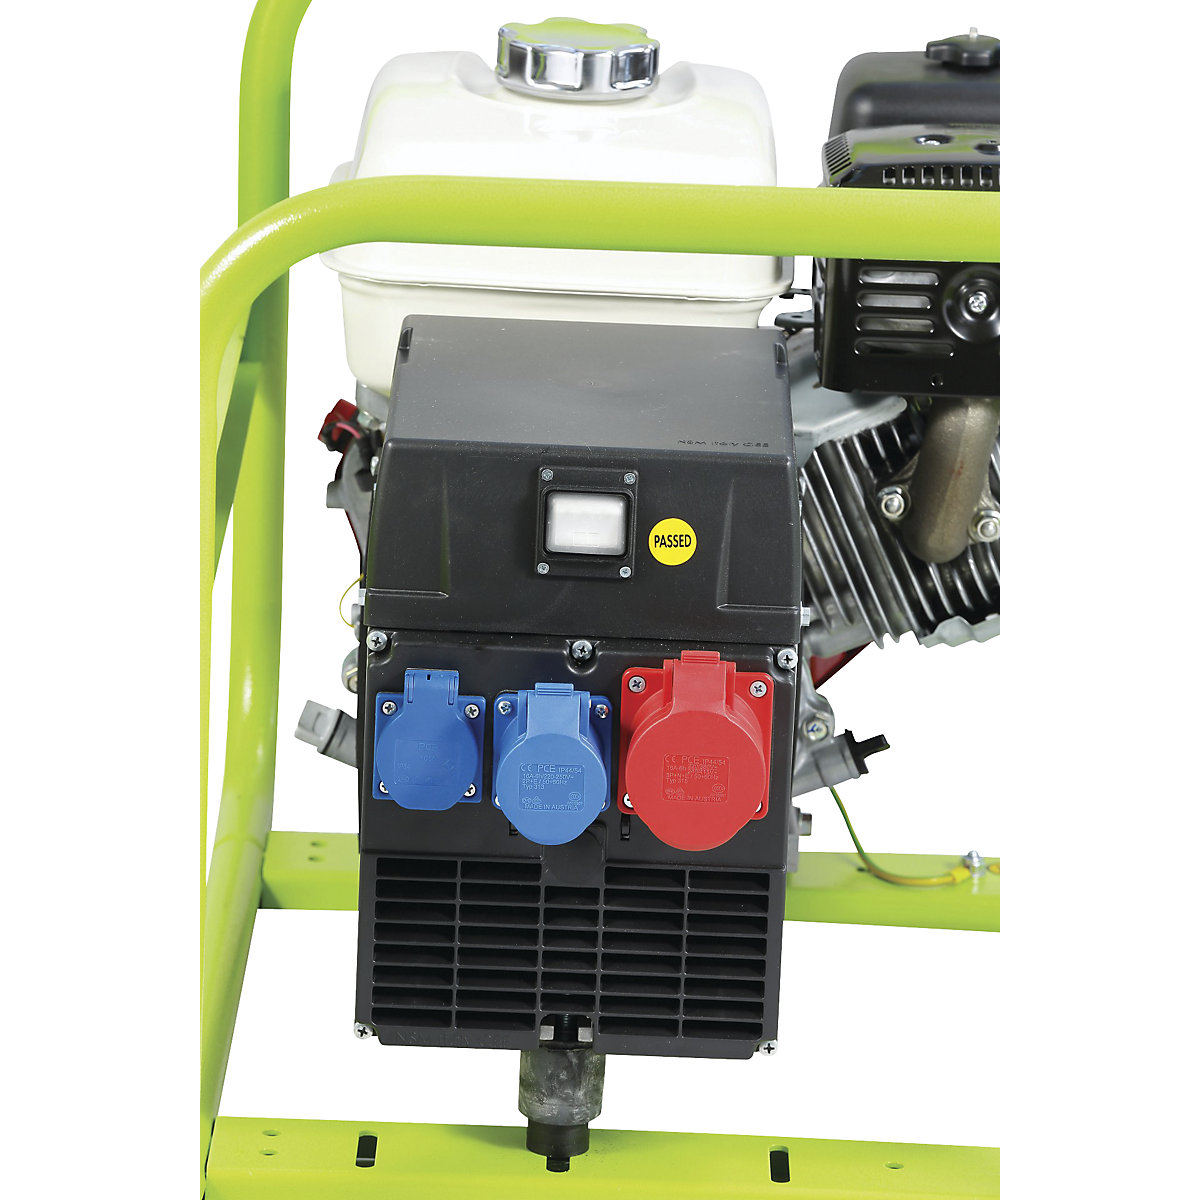 Generador eléctrico serie E – gasolina, 230 V – Pramac (Imagen del producto 2)-1